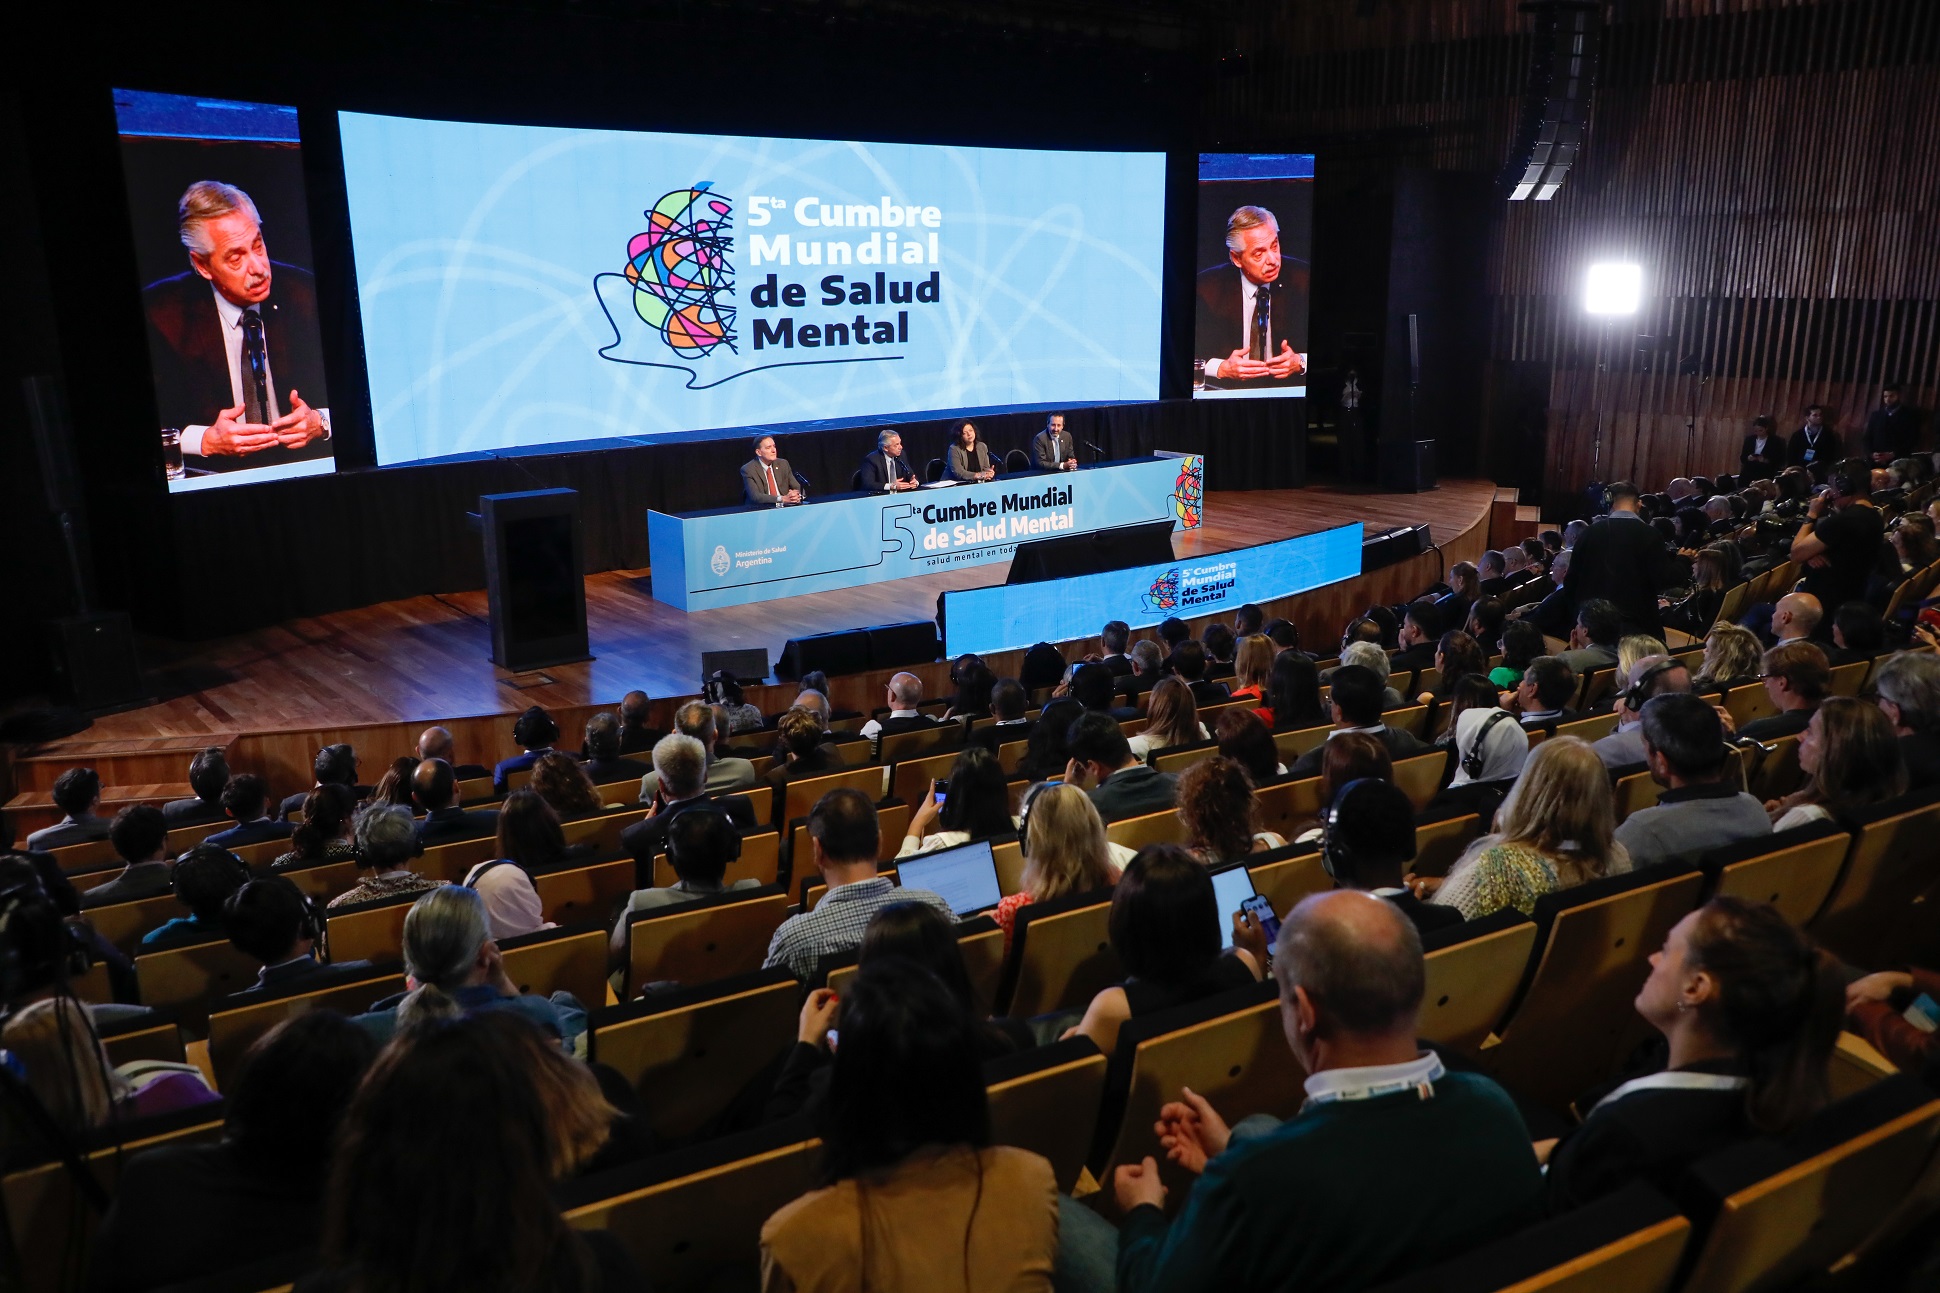 Comenzó la 5° Cumbre Mundial de Salud Mental, con sede en la Argentina